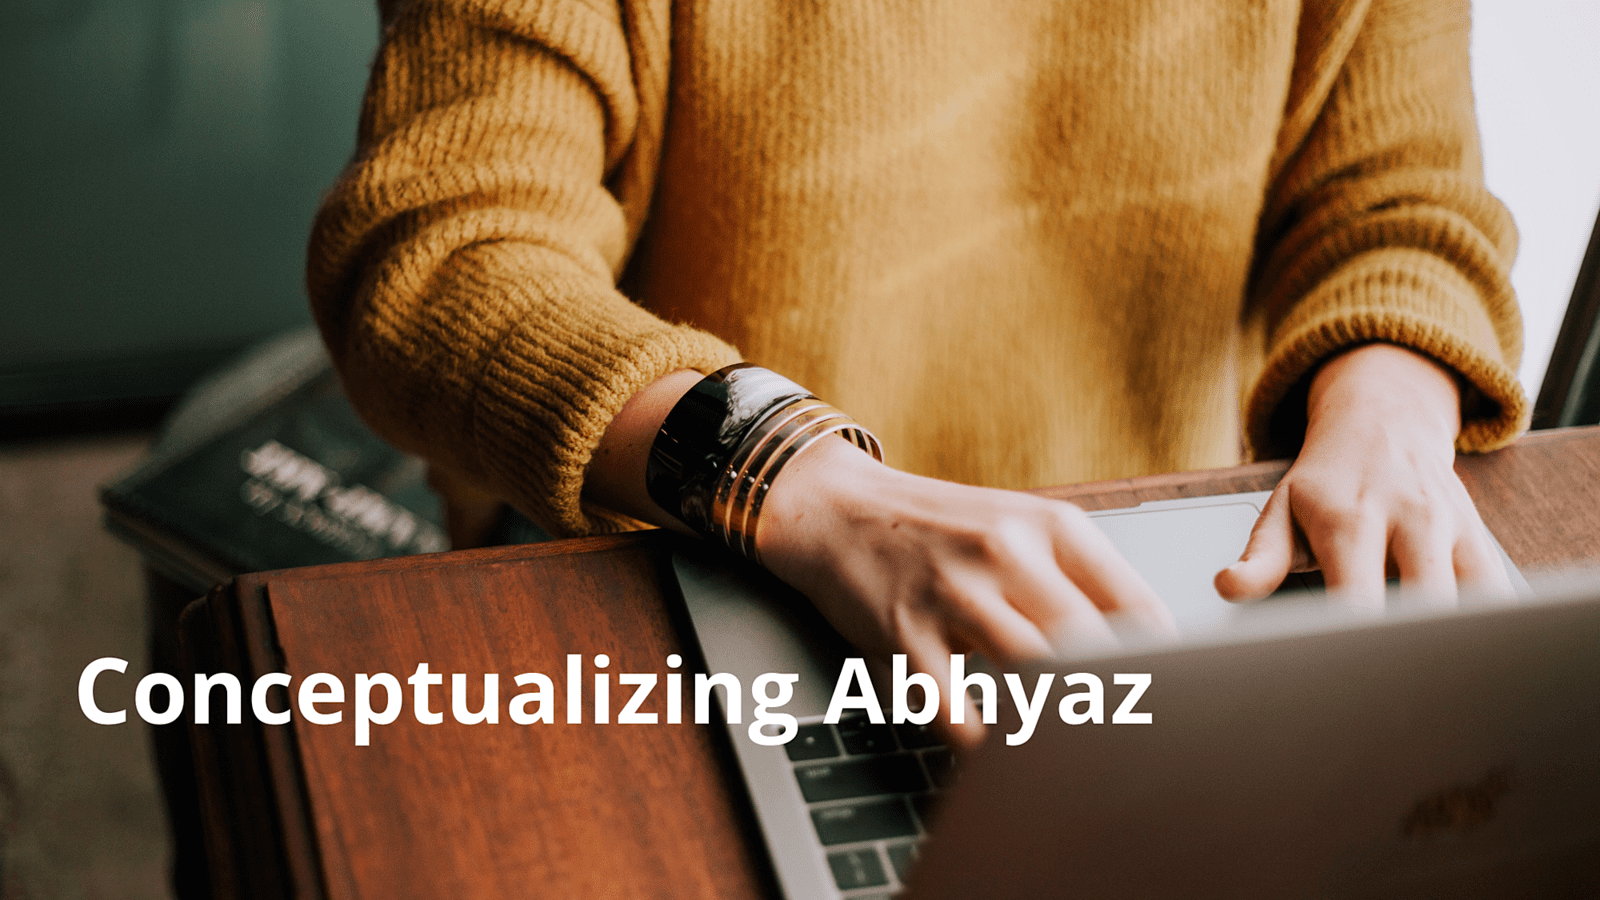 Conceptualizing the Abhyaz